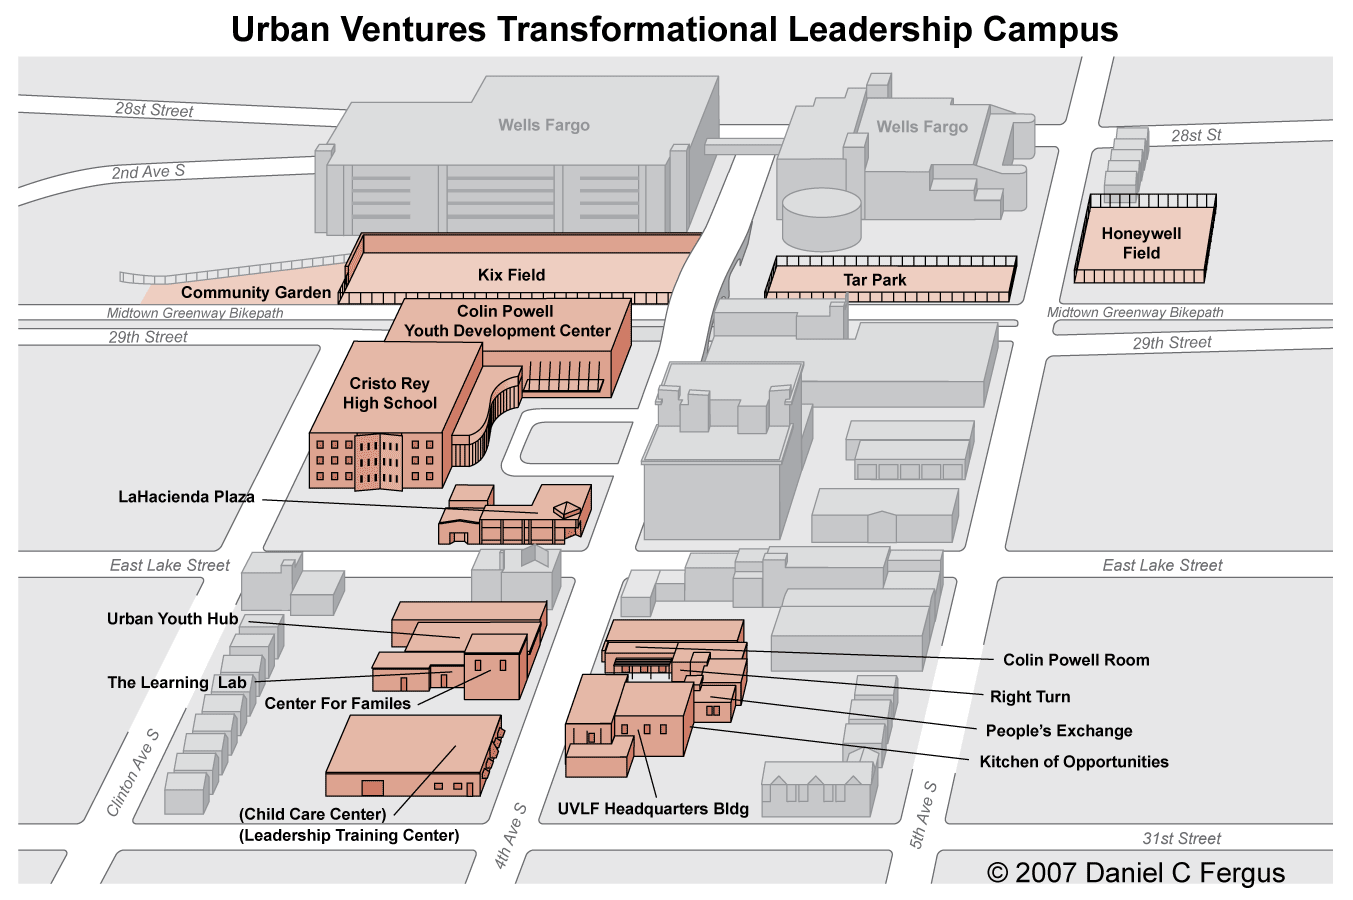 Artwork: 'Urban Ventures Leadership Campus'